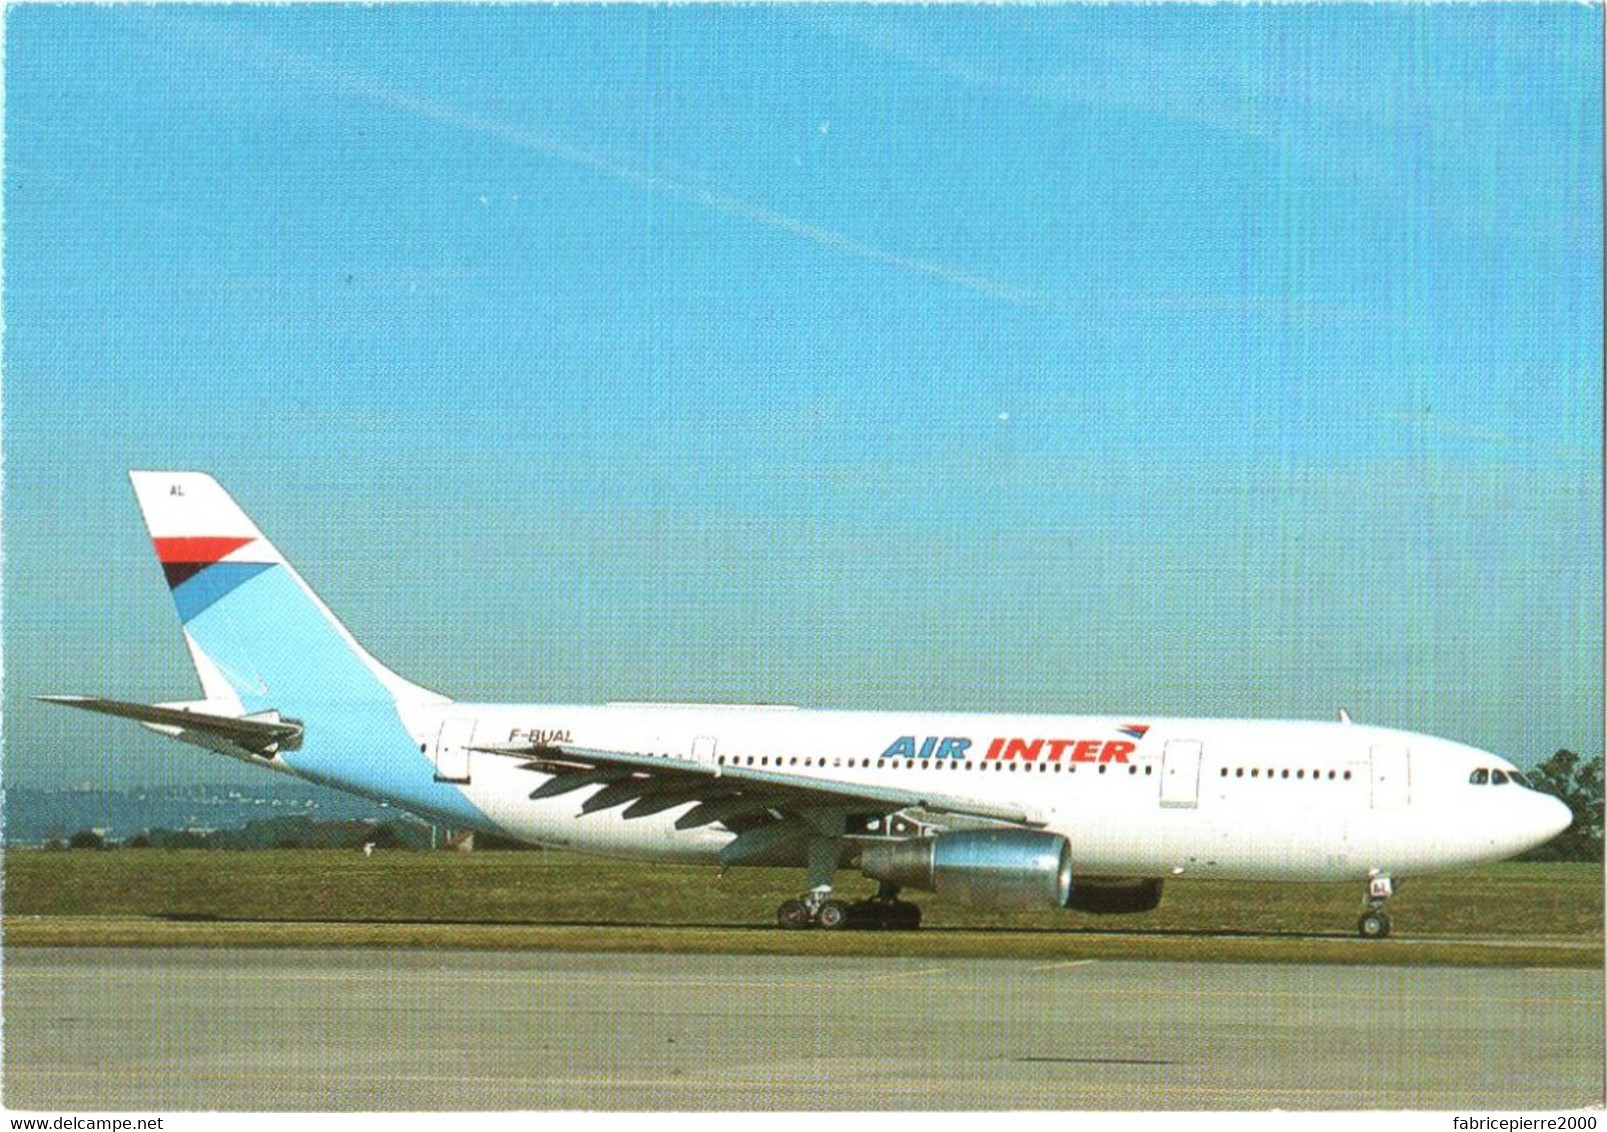 CPM 75 Paris - Aéroport De Paris-Orly. Airbus A-300 B2 (F-BUAL) D'AIR INTER TBE, Scan Recto Verso, Flamme SOS Amitiés - Aeroporto